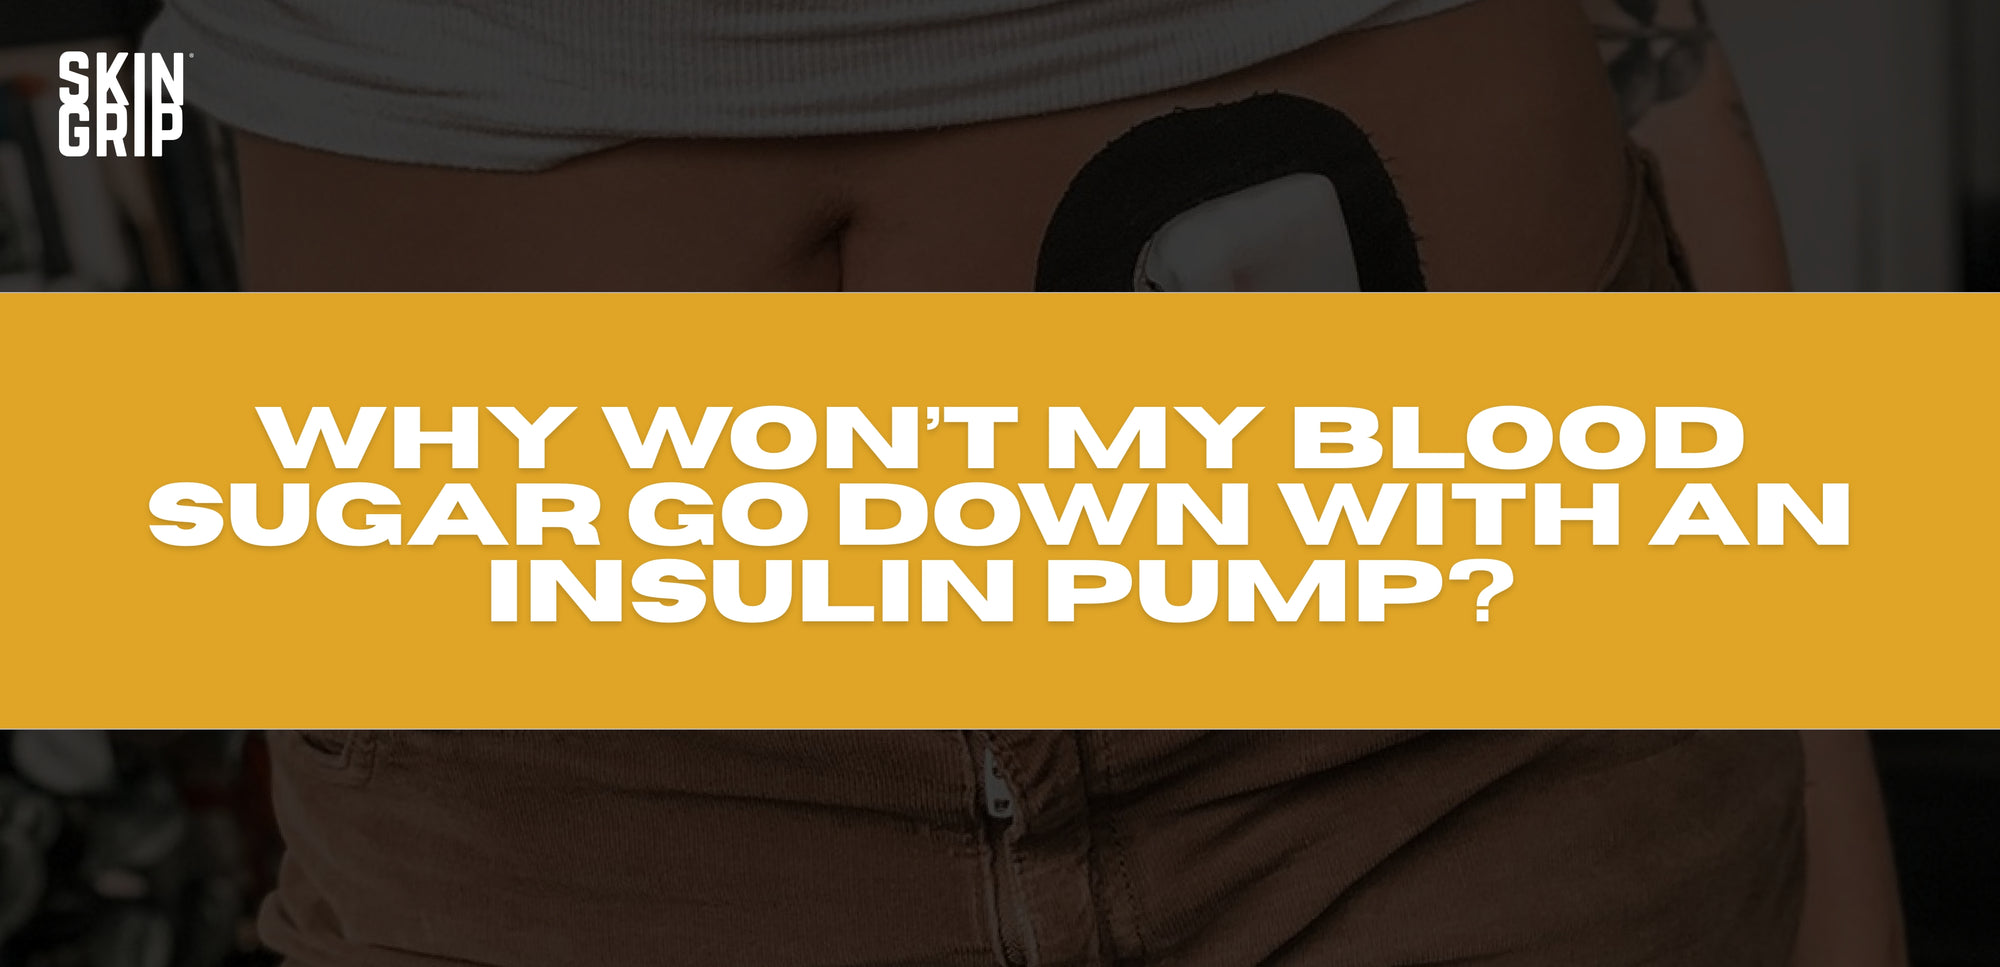 Why won't my blood sugar go down with an insulin pump?